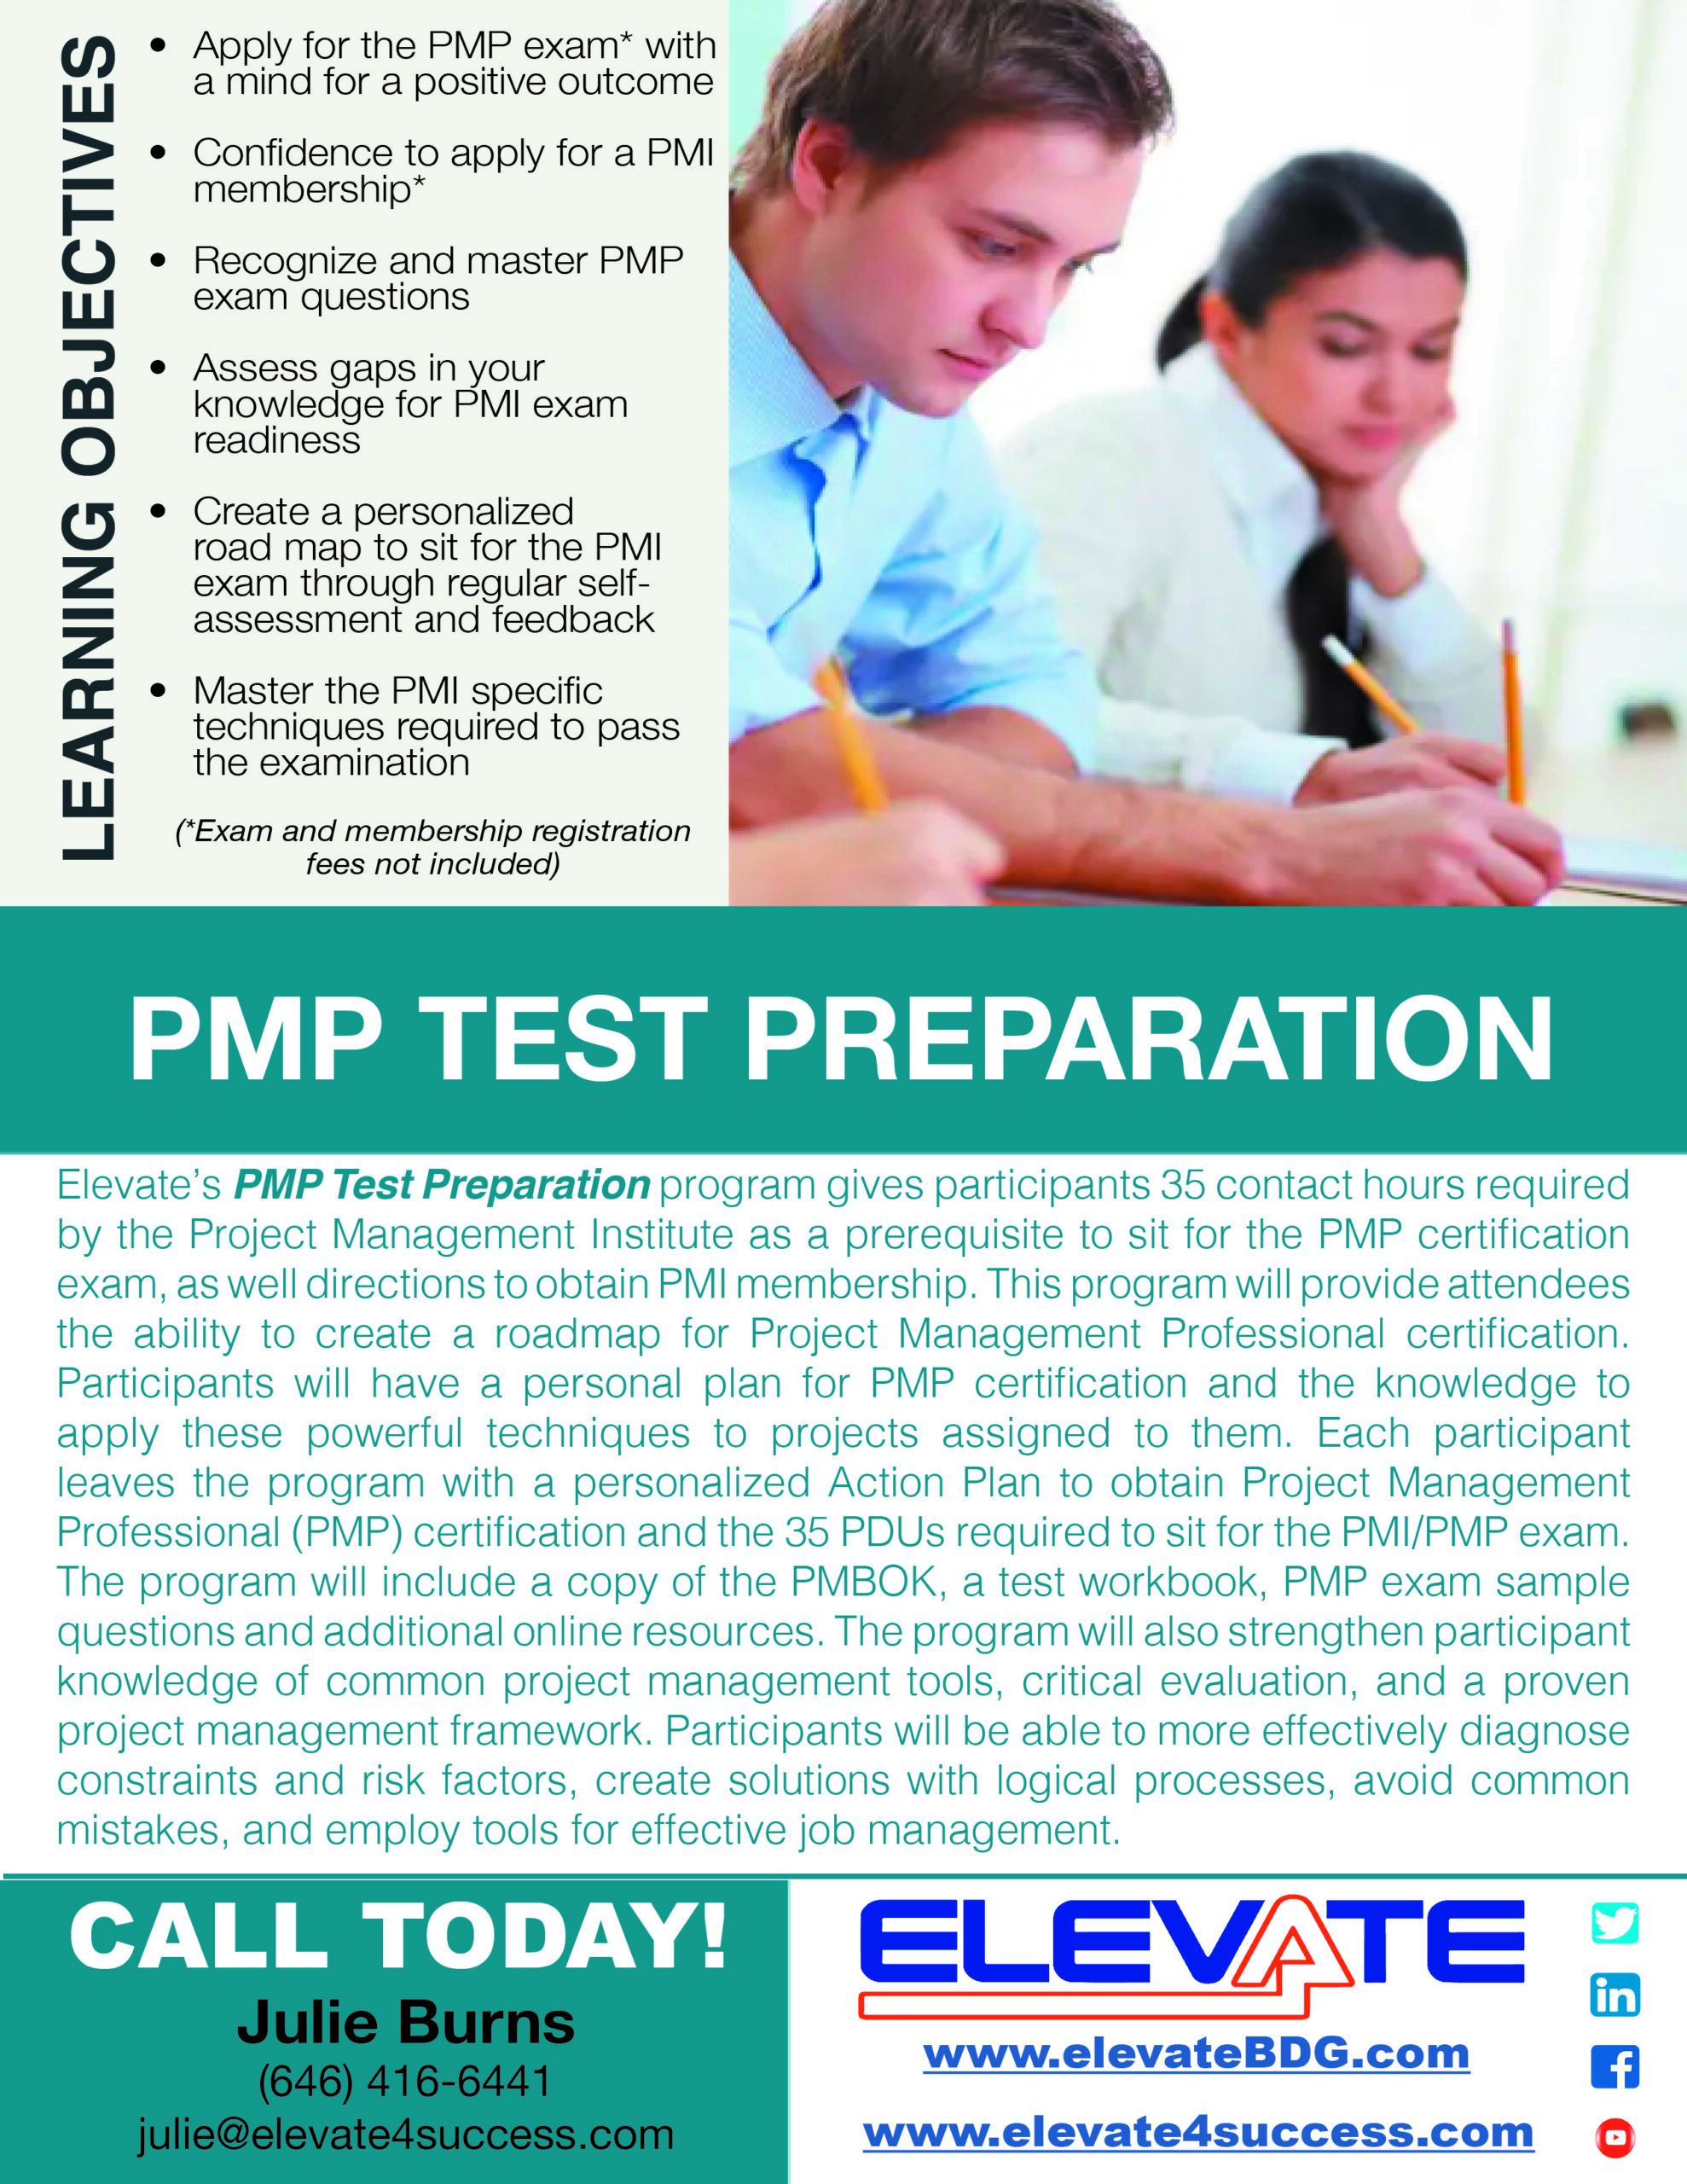 PMP Test Preparation Flier